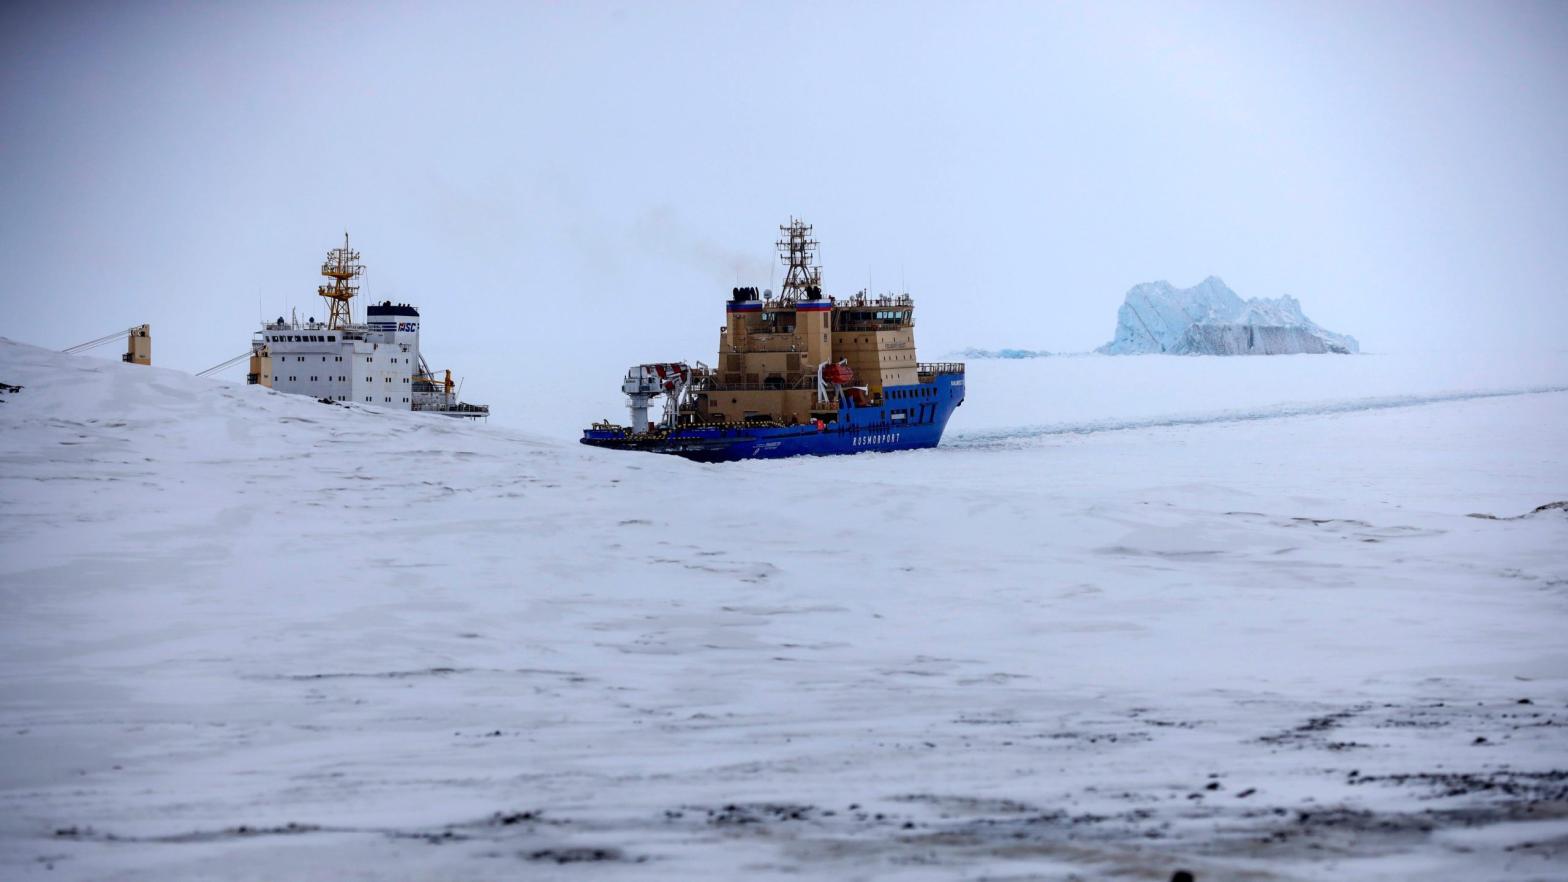 An icebreaker makes the path for a cargo ship with an iceberg in the background near a port on the Alexandra Land island near Nagurskoye, Russia. (Photo: Alexander Zemlianichenko, AP)